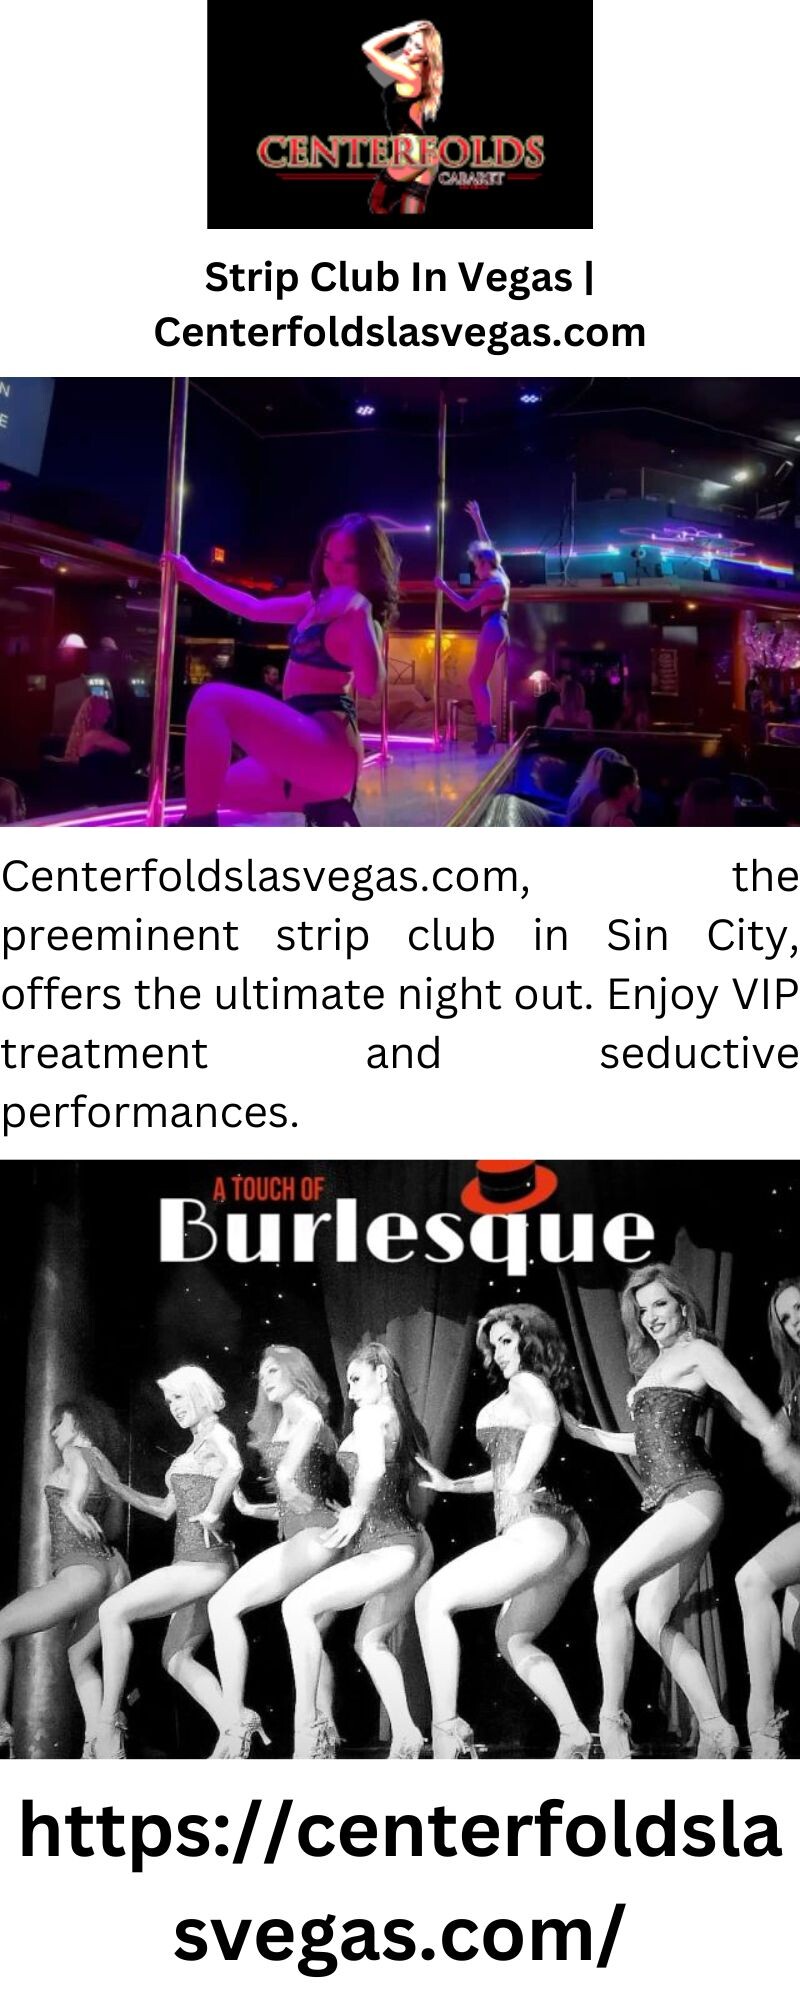 Strip-Club-In-Vegas-Centerfoldslasvegas.come996e1be996e6ee2.jpg